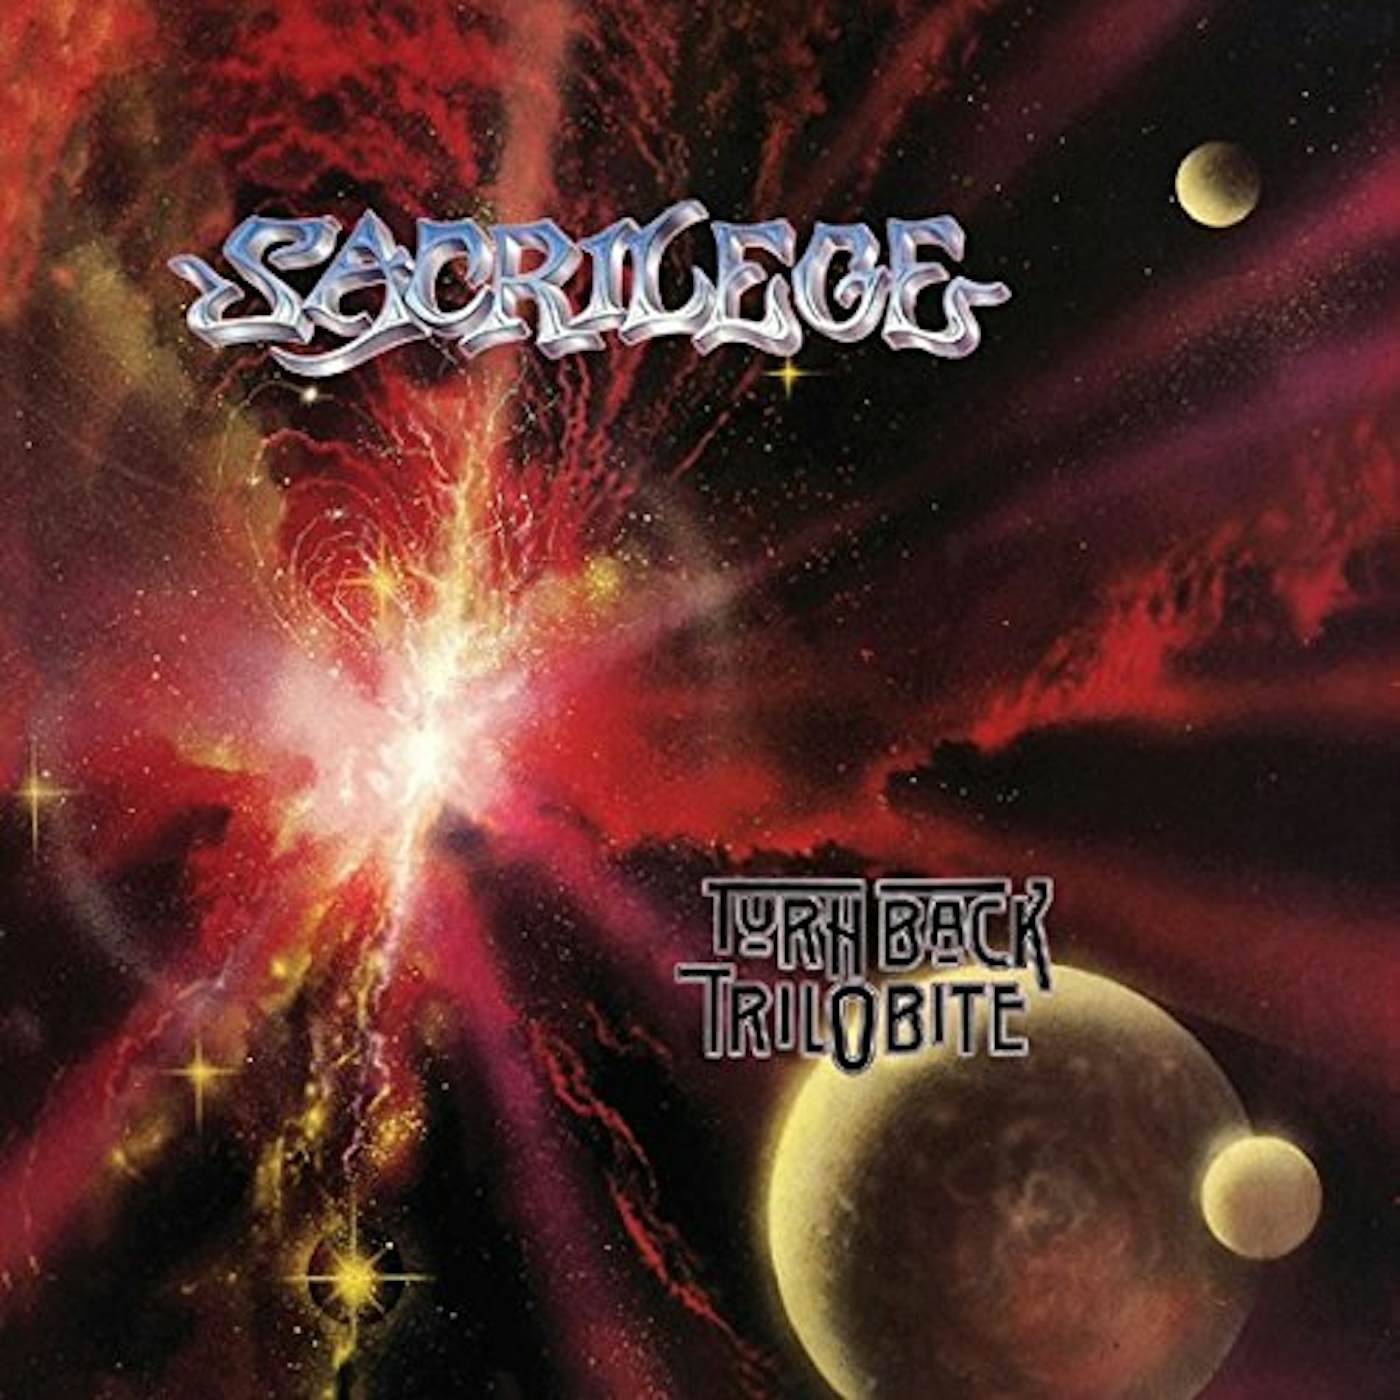 Sacrilege 117424 Turn Back Trilobite Vinyl Record